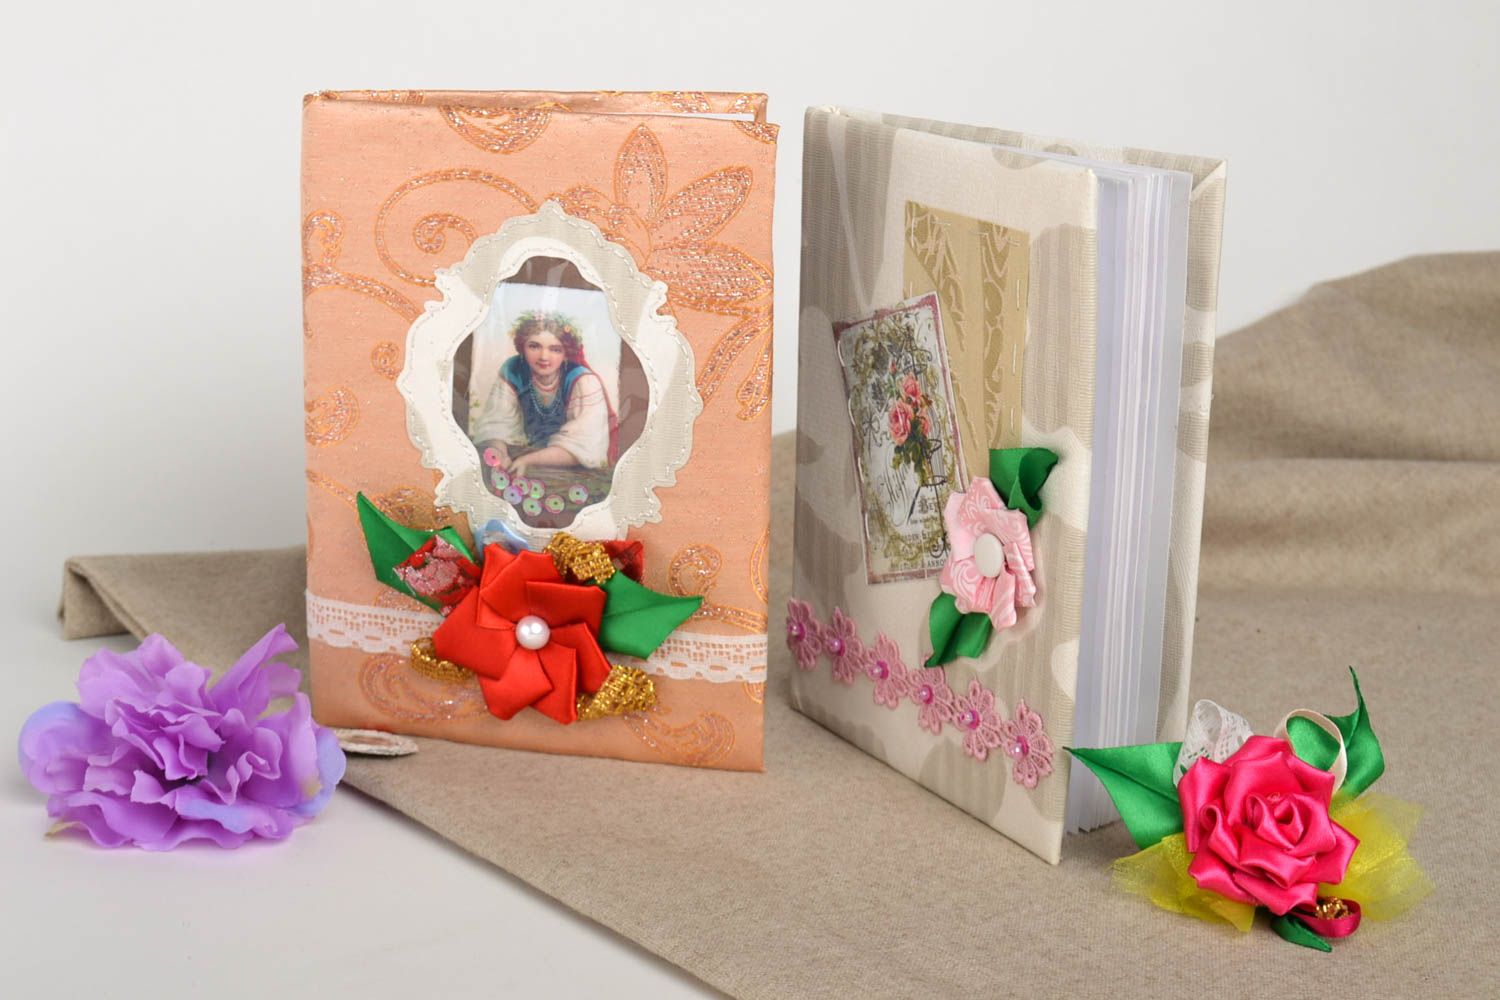 Blocs de notas hechos a mano agendas decoradas regalo original para mujer foto 1